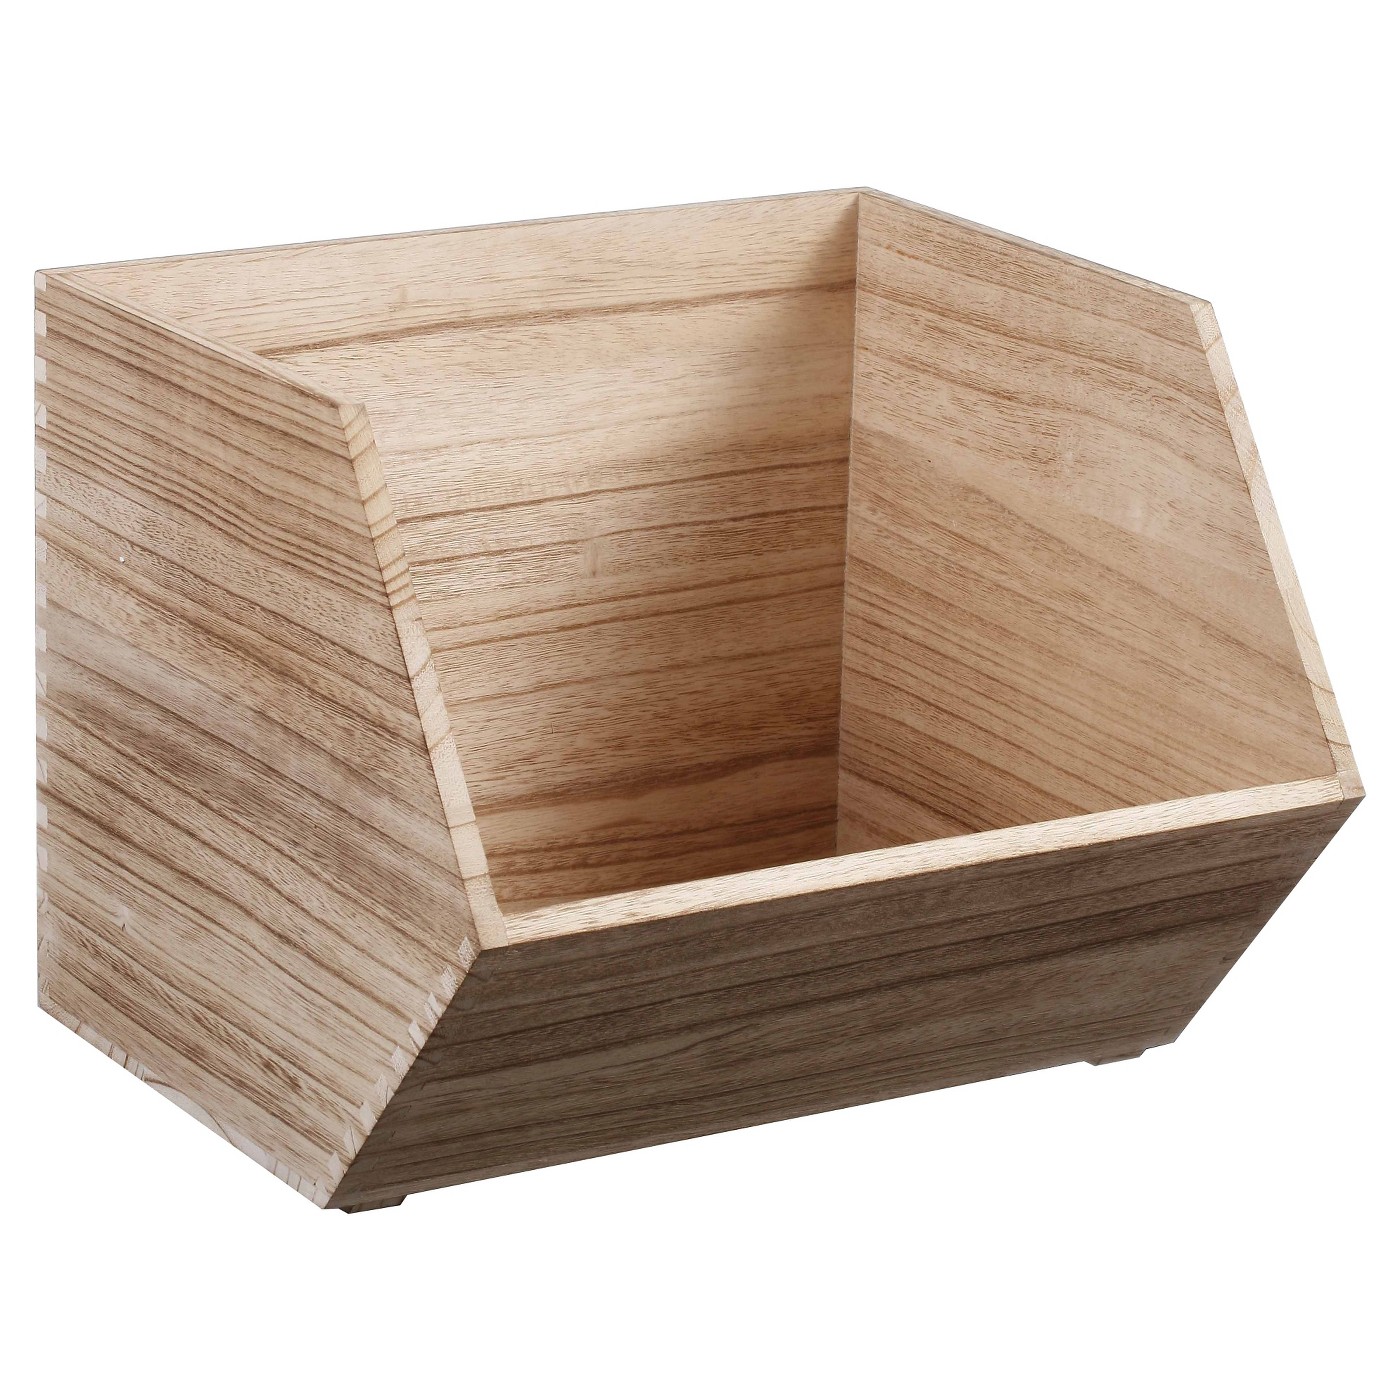 Versatile and beautiful wooden storage bin.